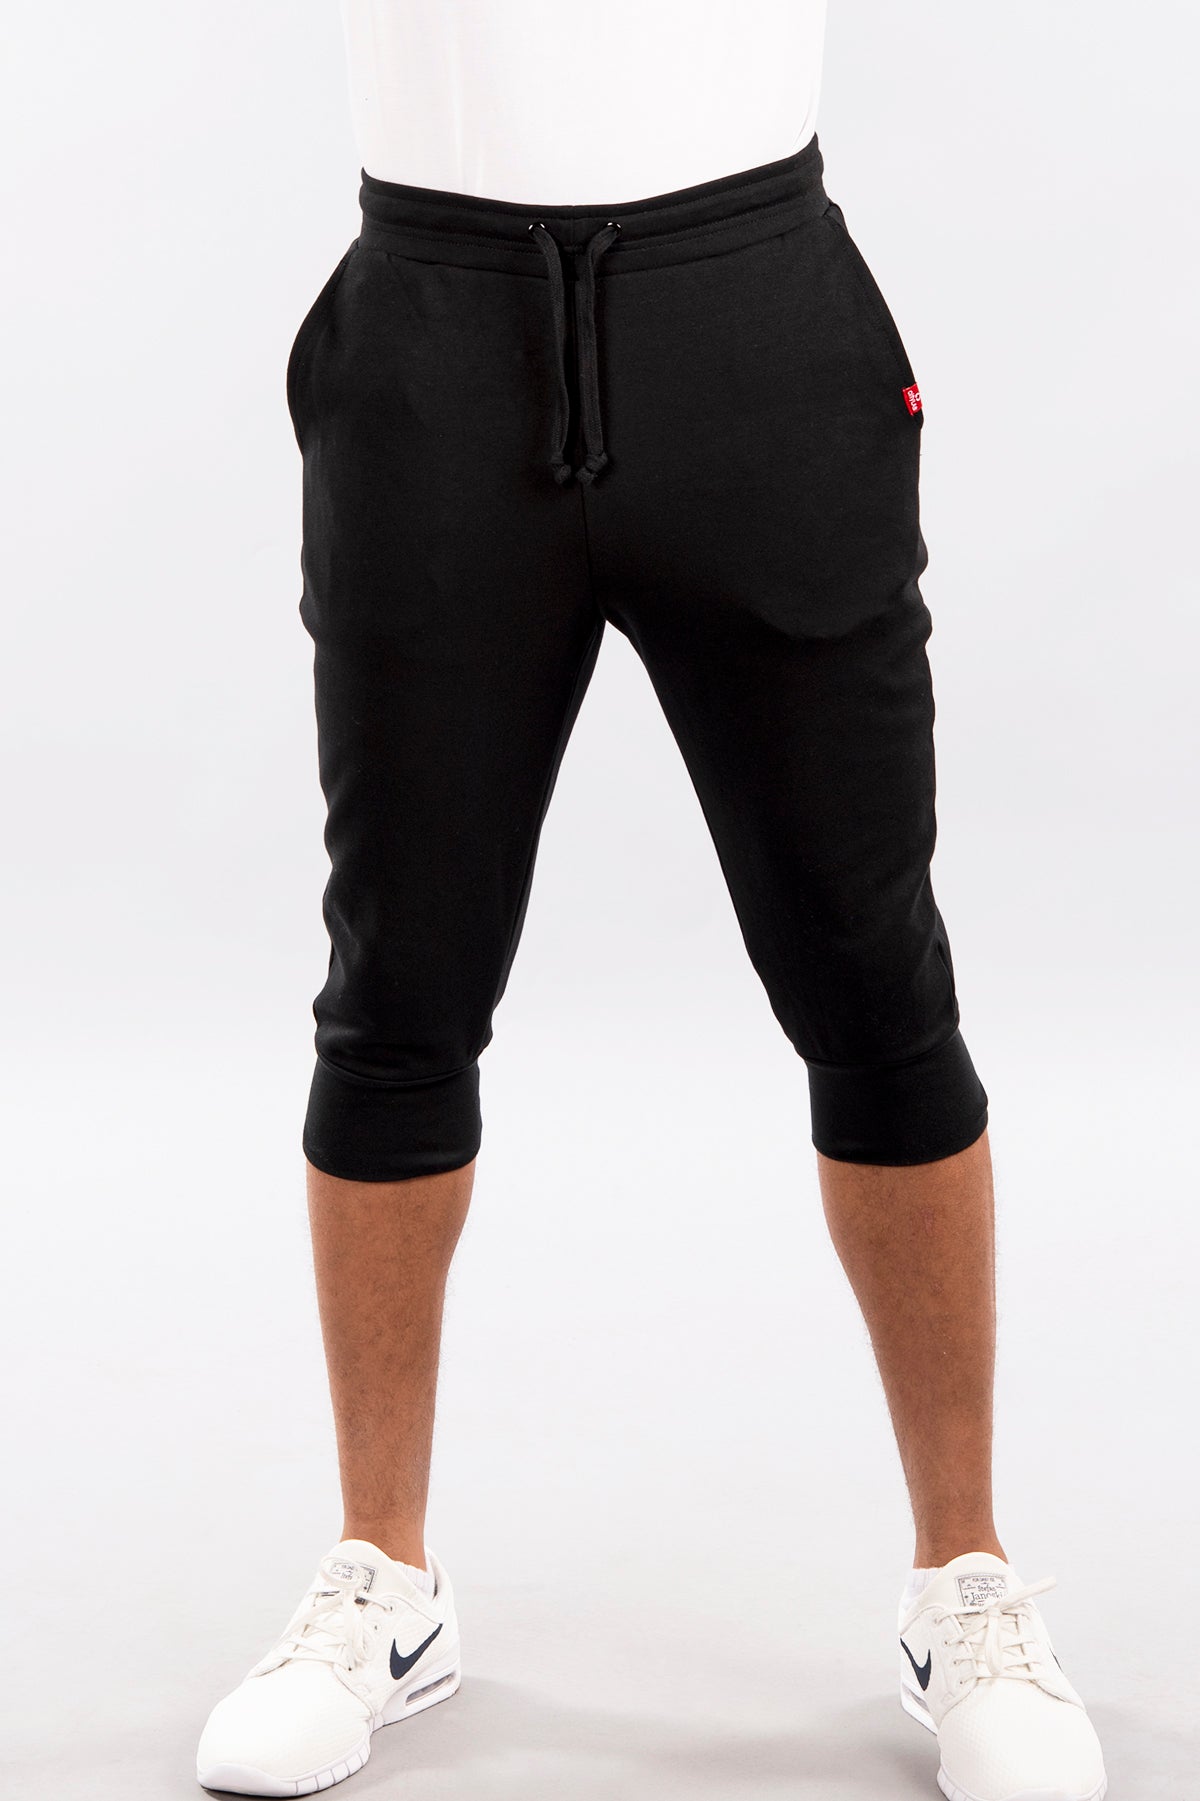  U/B Men's 3/4 Football Pants Shorts Breathable Sweatpants  (S,Black) : Clothing, Shoes & Jewelry